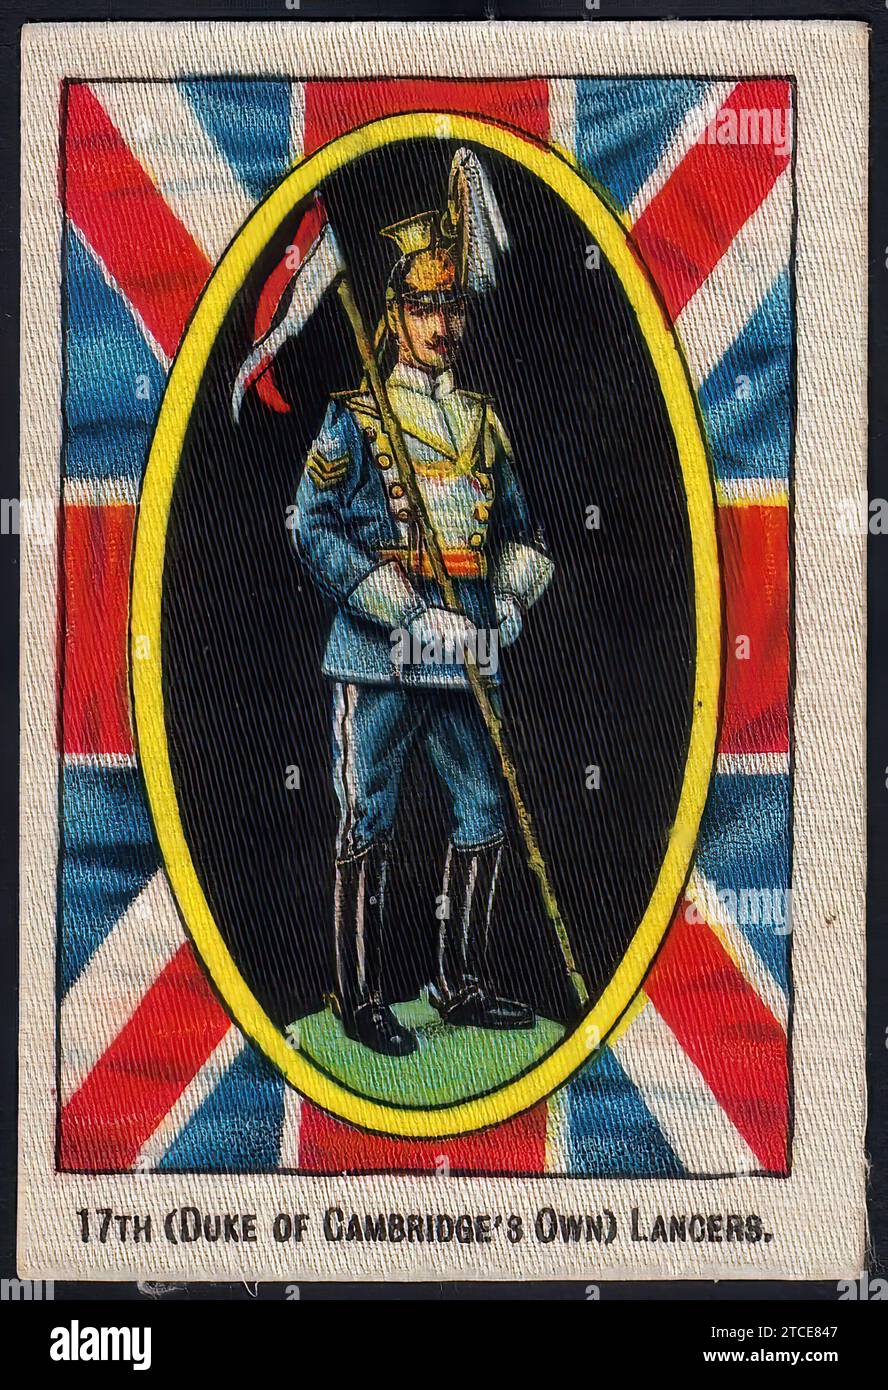 17e (Duke of Cambridge's Own) Lancers - Vintage British Tradecard Banque D'Images